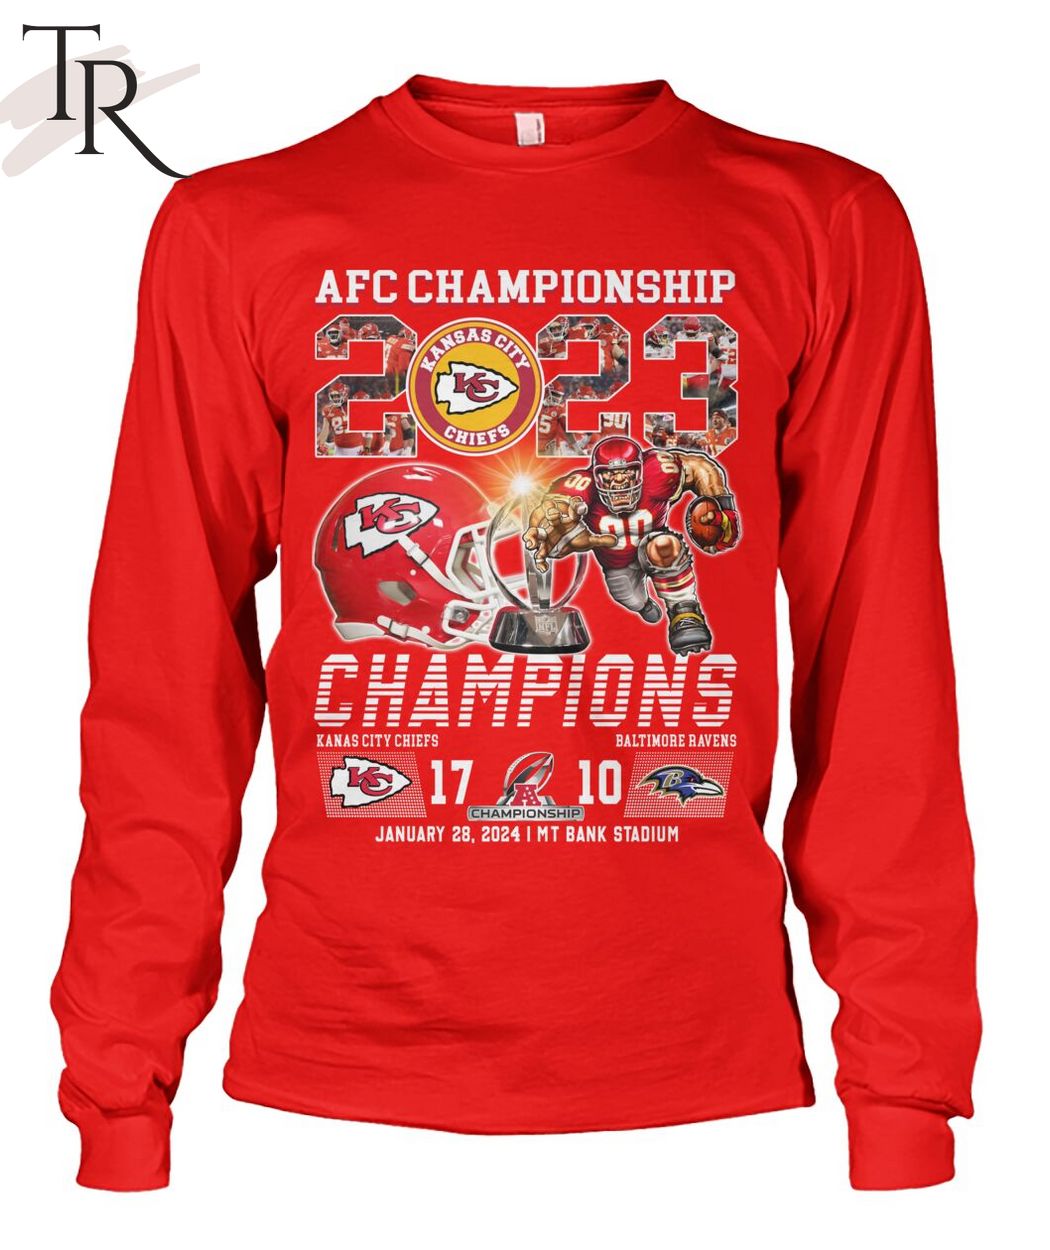 AFC Championship 2023 Kansas City Chiefs 17 - 10 Baltimore Ravens January 28, 2024 MT Bank Stadium T-Shirt